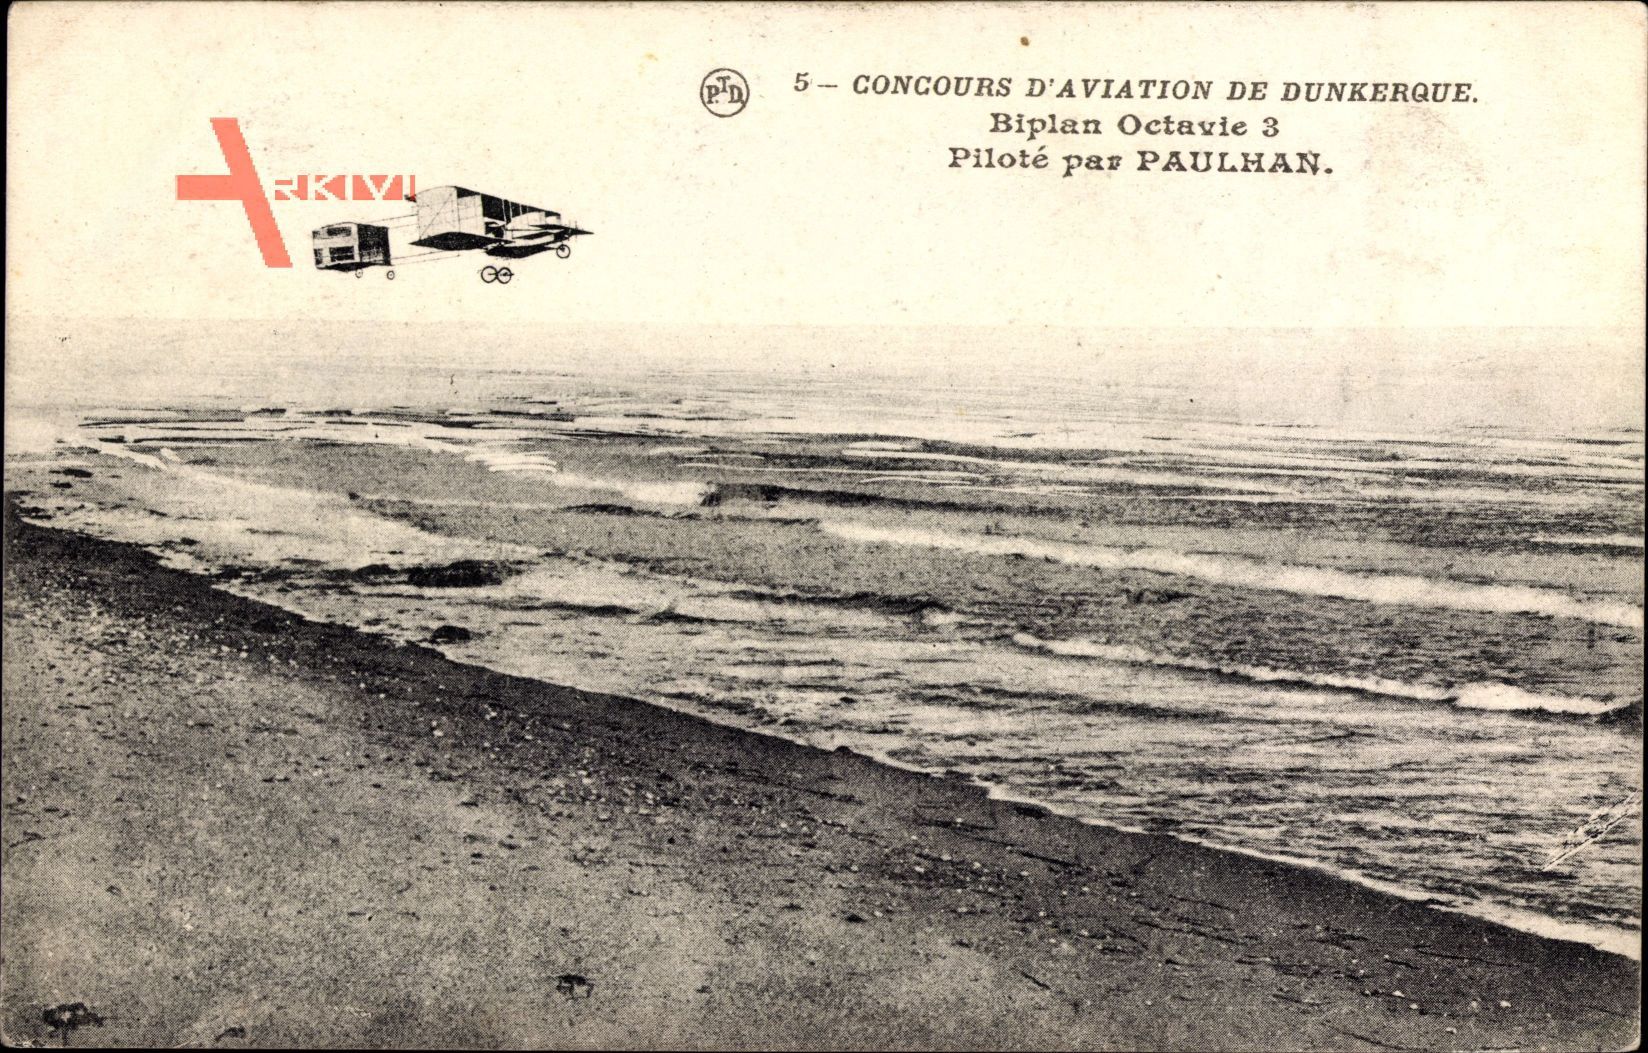 Concours dAviation de Dunkerque, Biplan Octavie 3, Paulhan